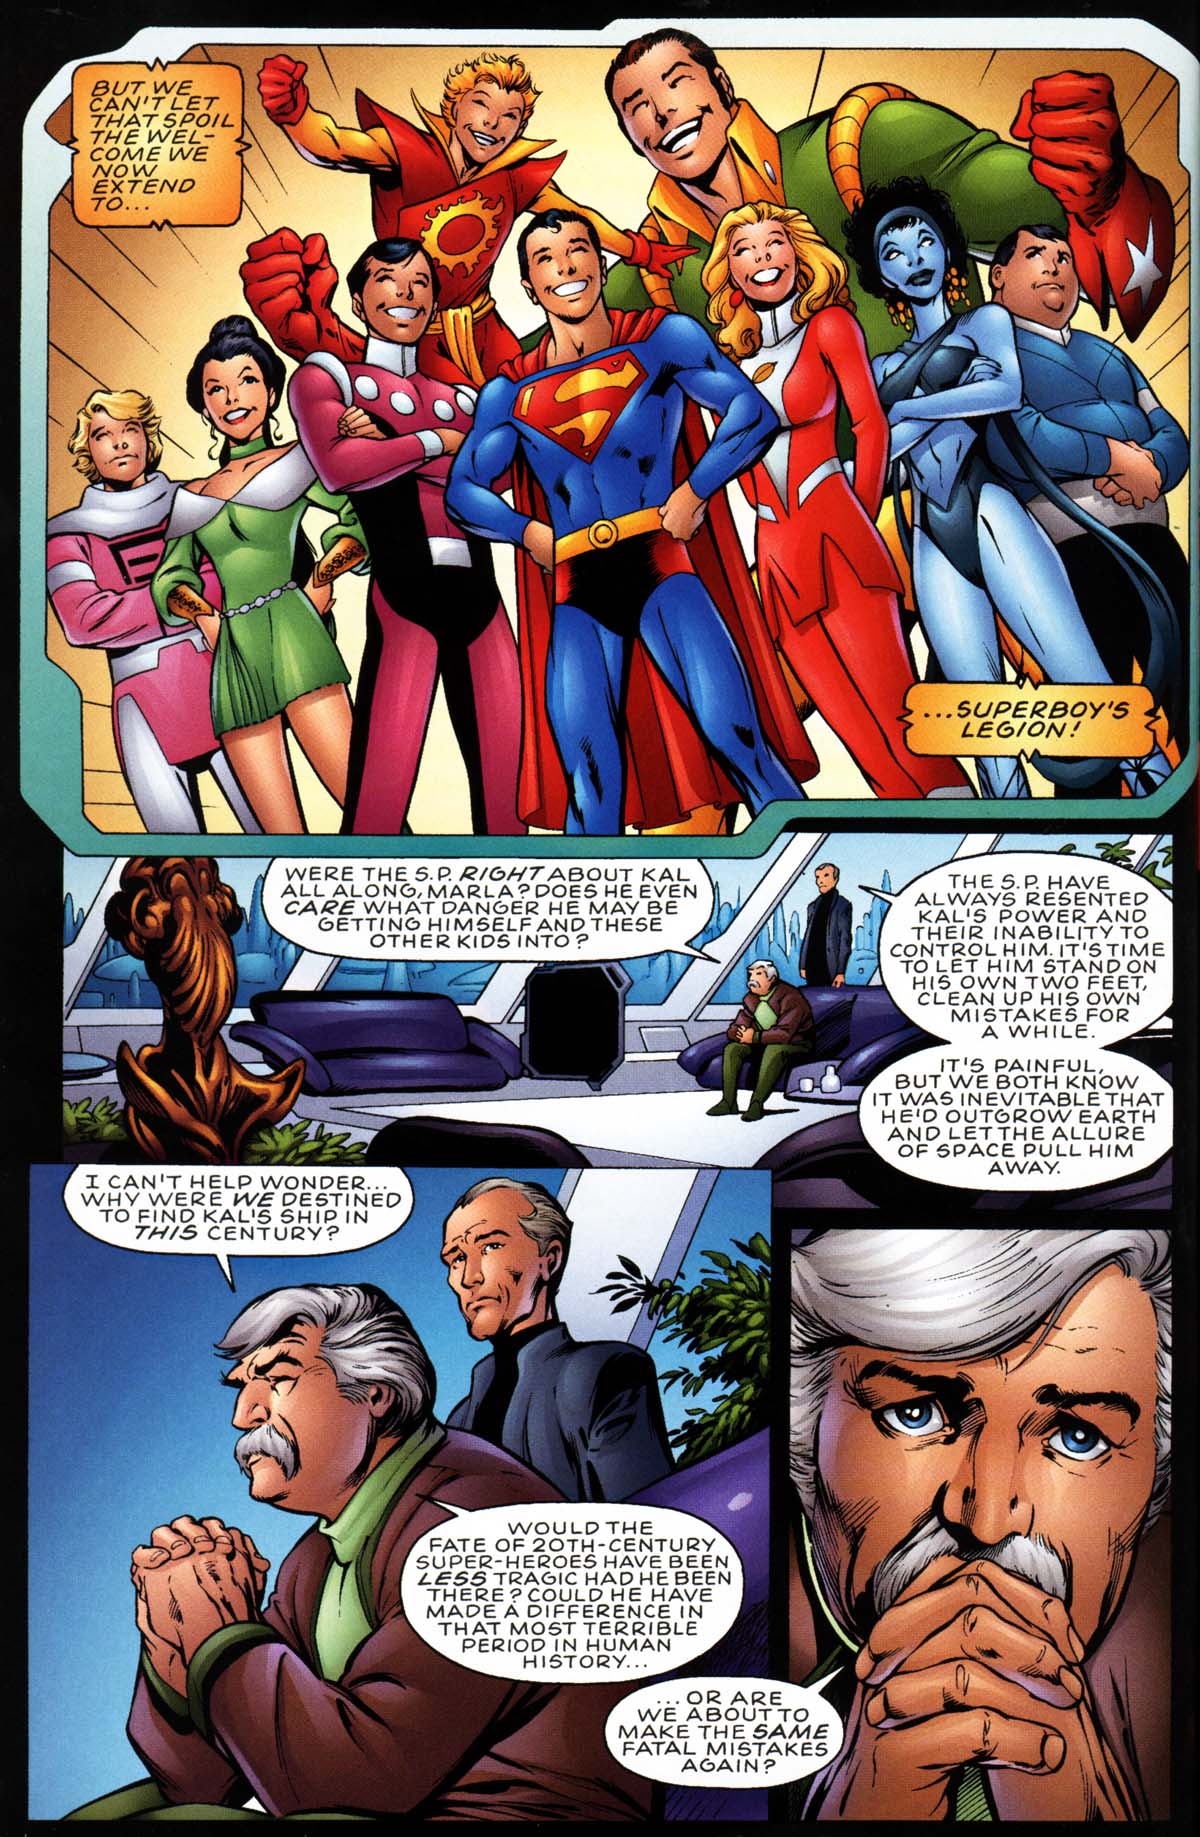 Read online Superboy's Legion comic -  Issue #1 - 20